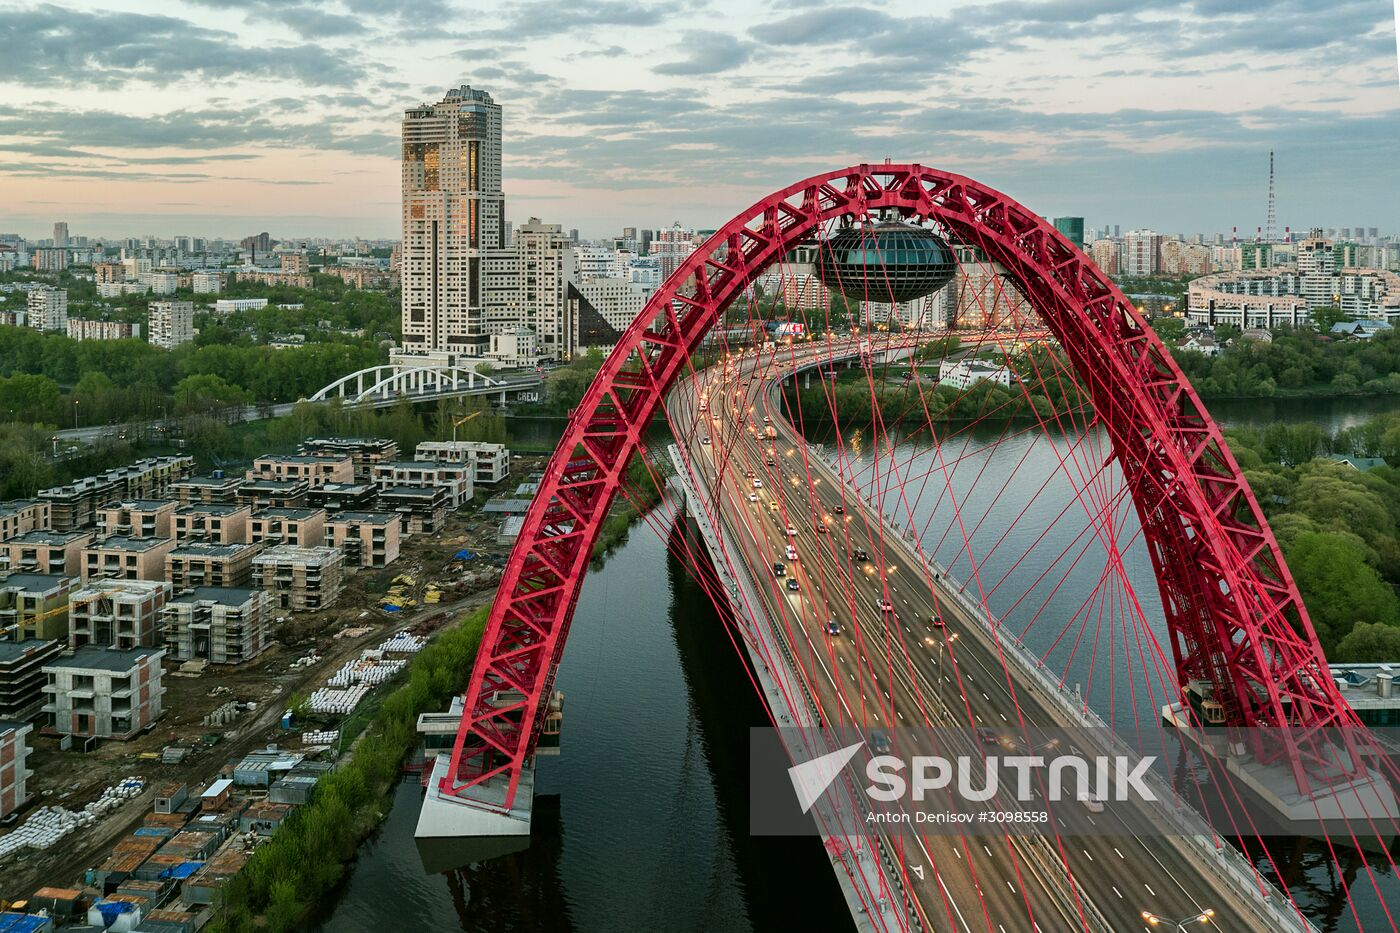 Zhivopisny Bridge in northwest Moscow